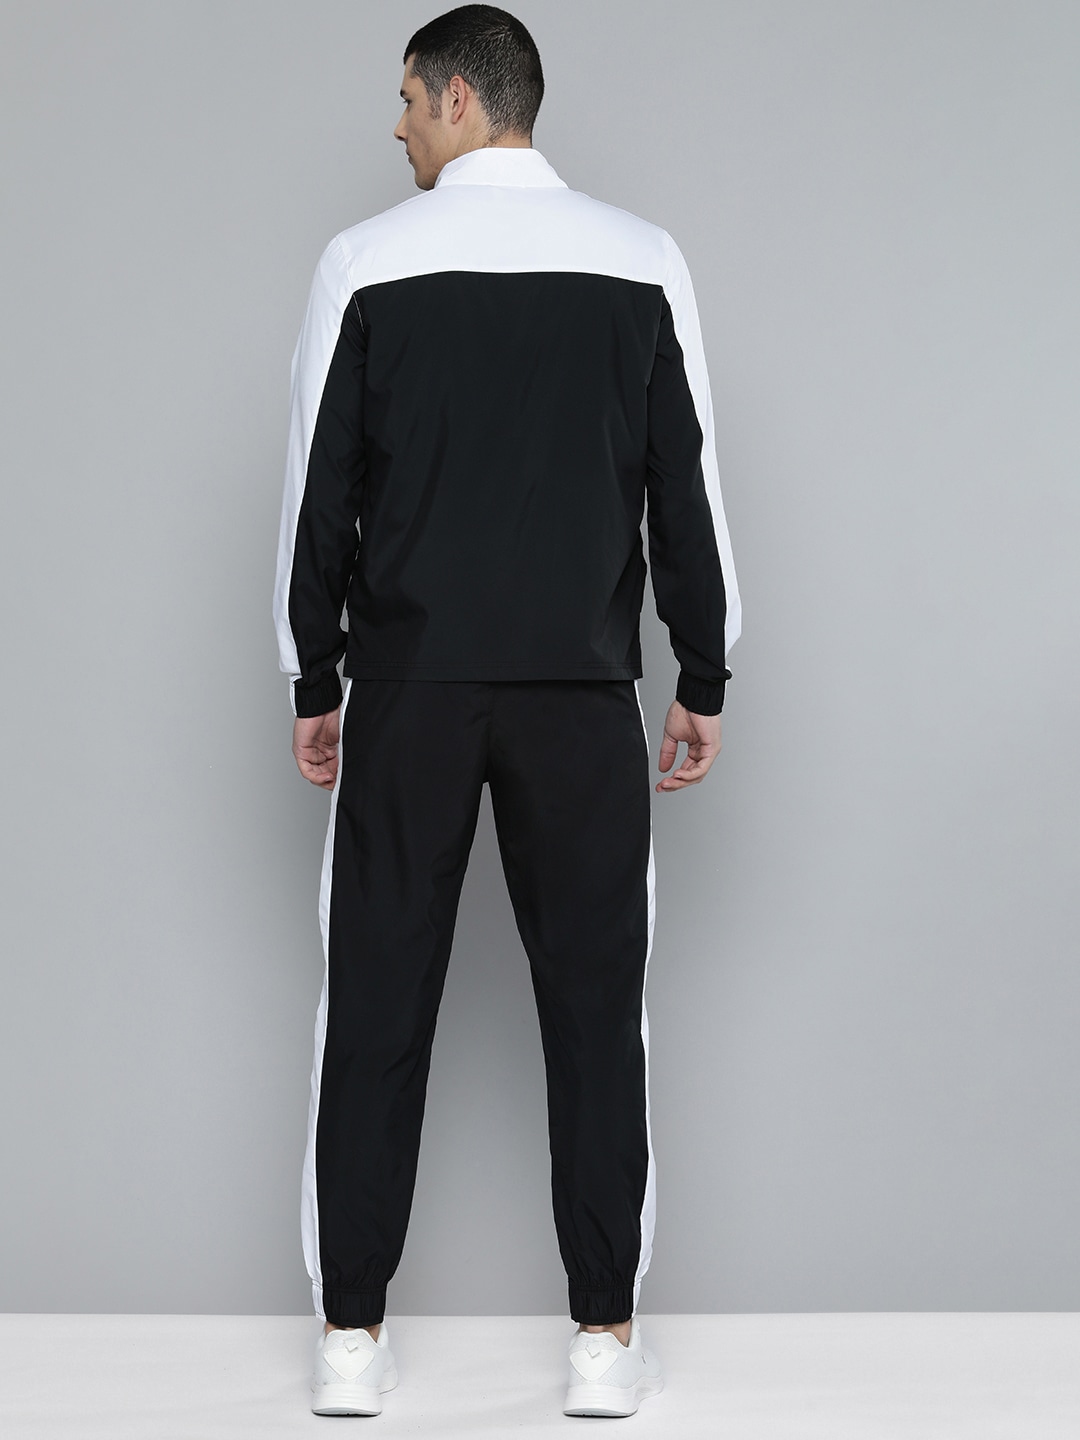 Clothing Tracksuits | Puma Men Charcoal Black & White Colourblocked Tracksuits - OK35620